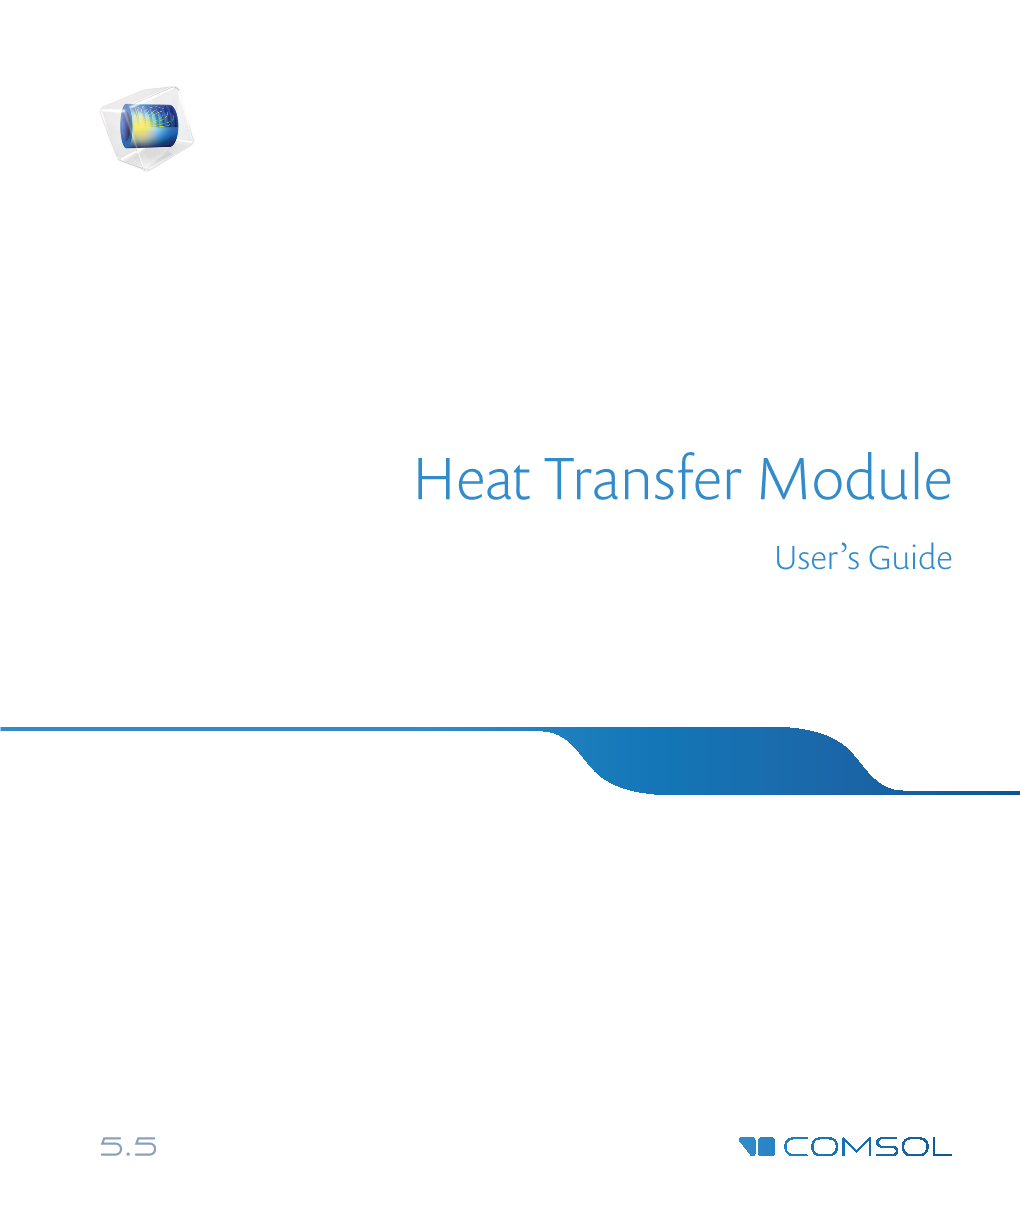 The Heat Transfer Module User's Guide